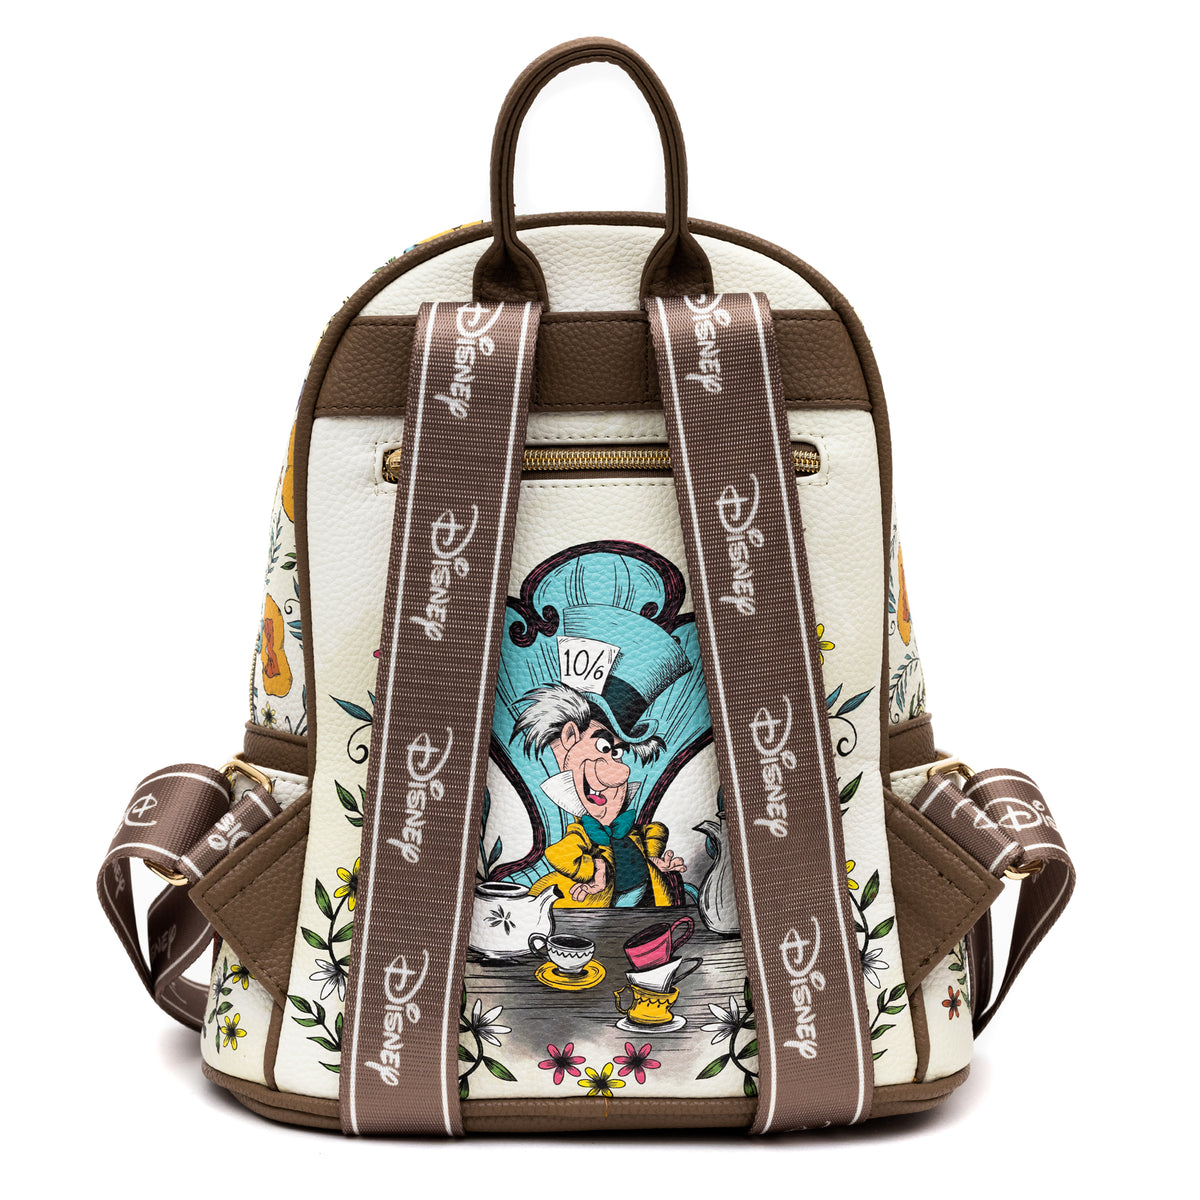 Disney Alice in Wonderland Backpack - Limited Edition